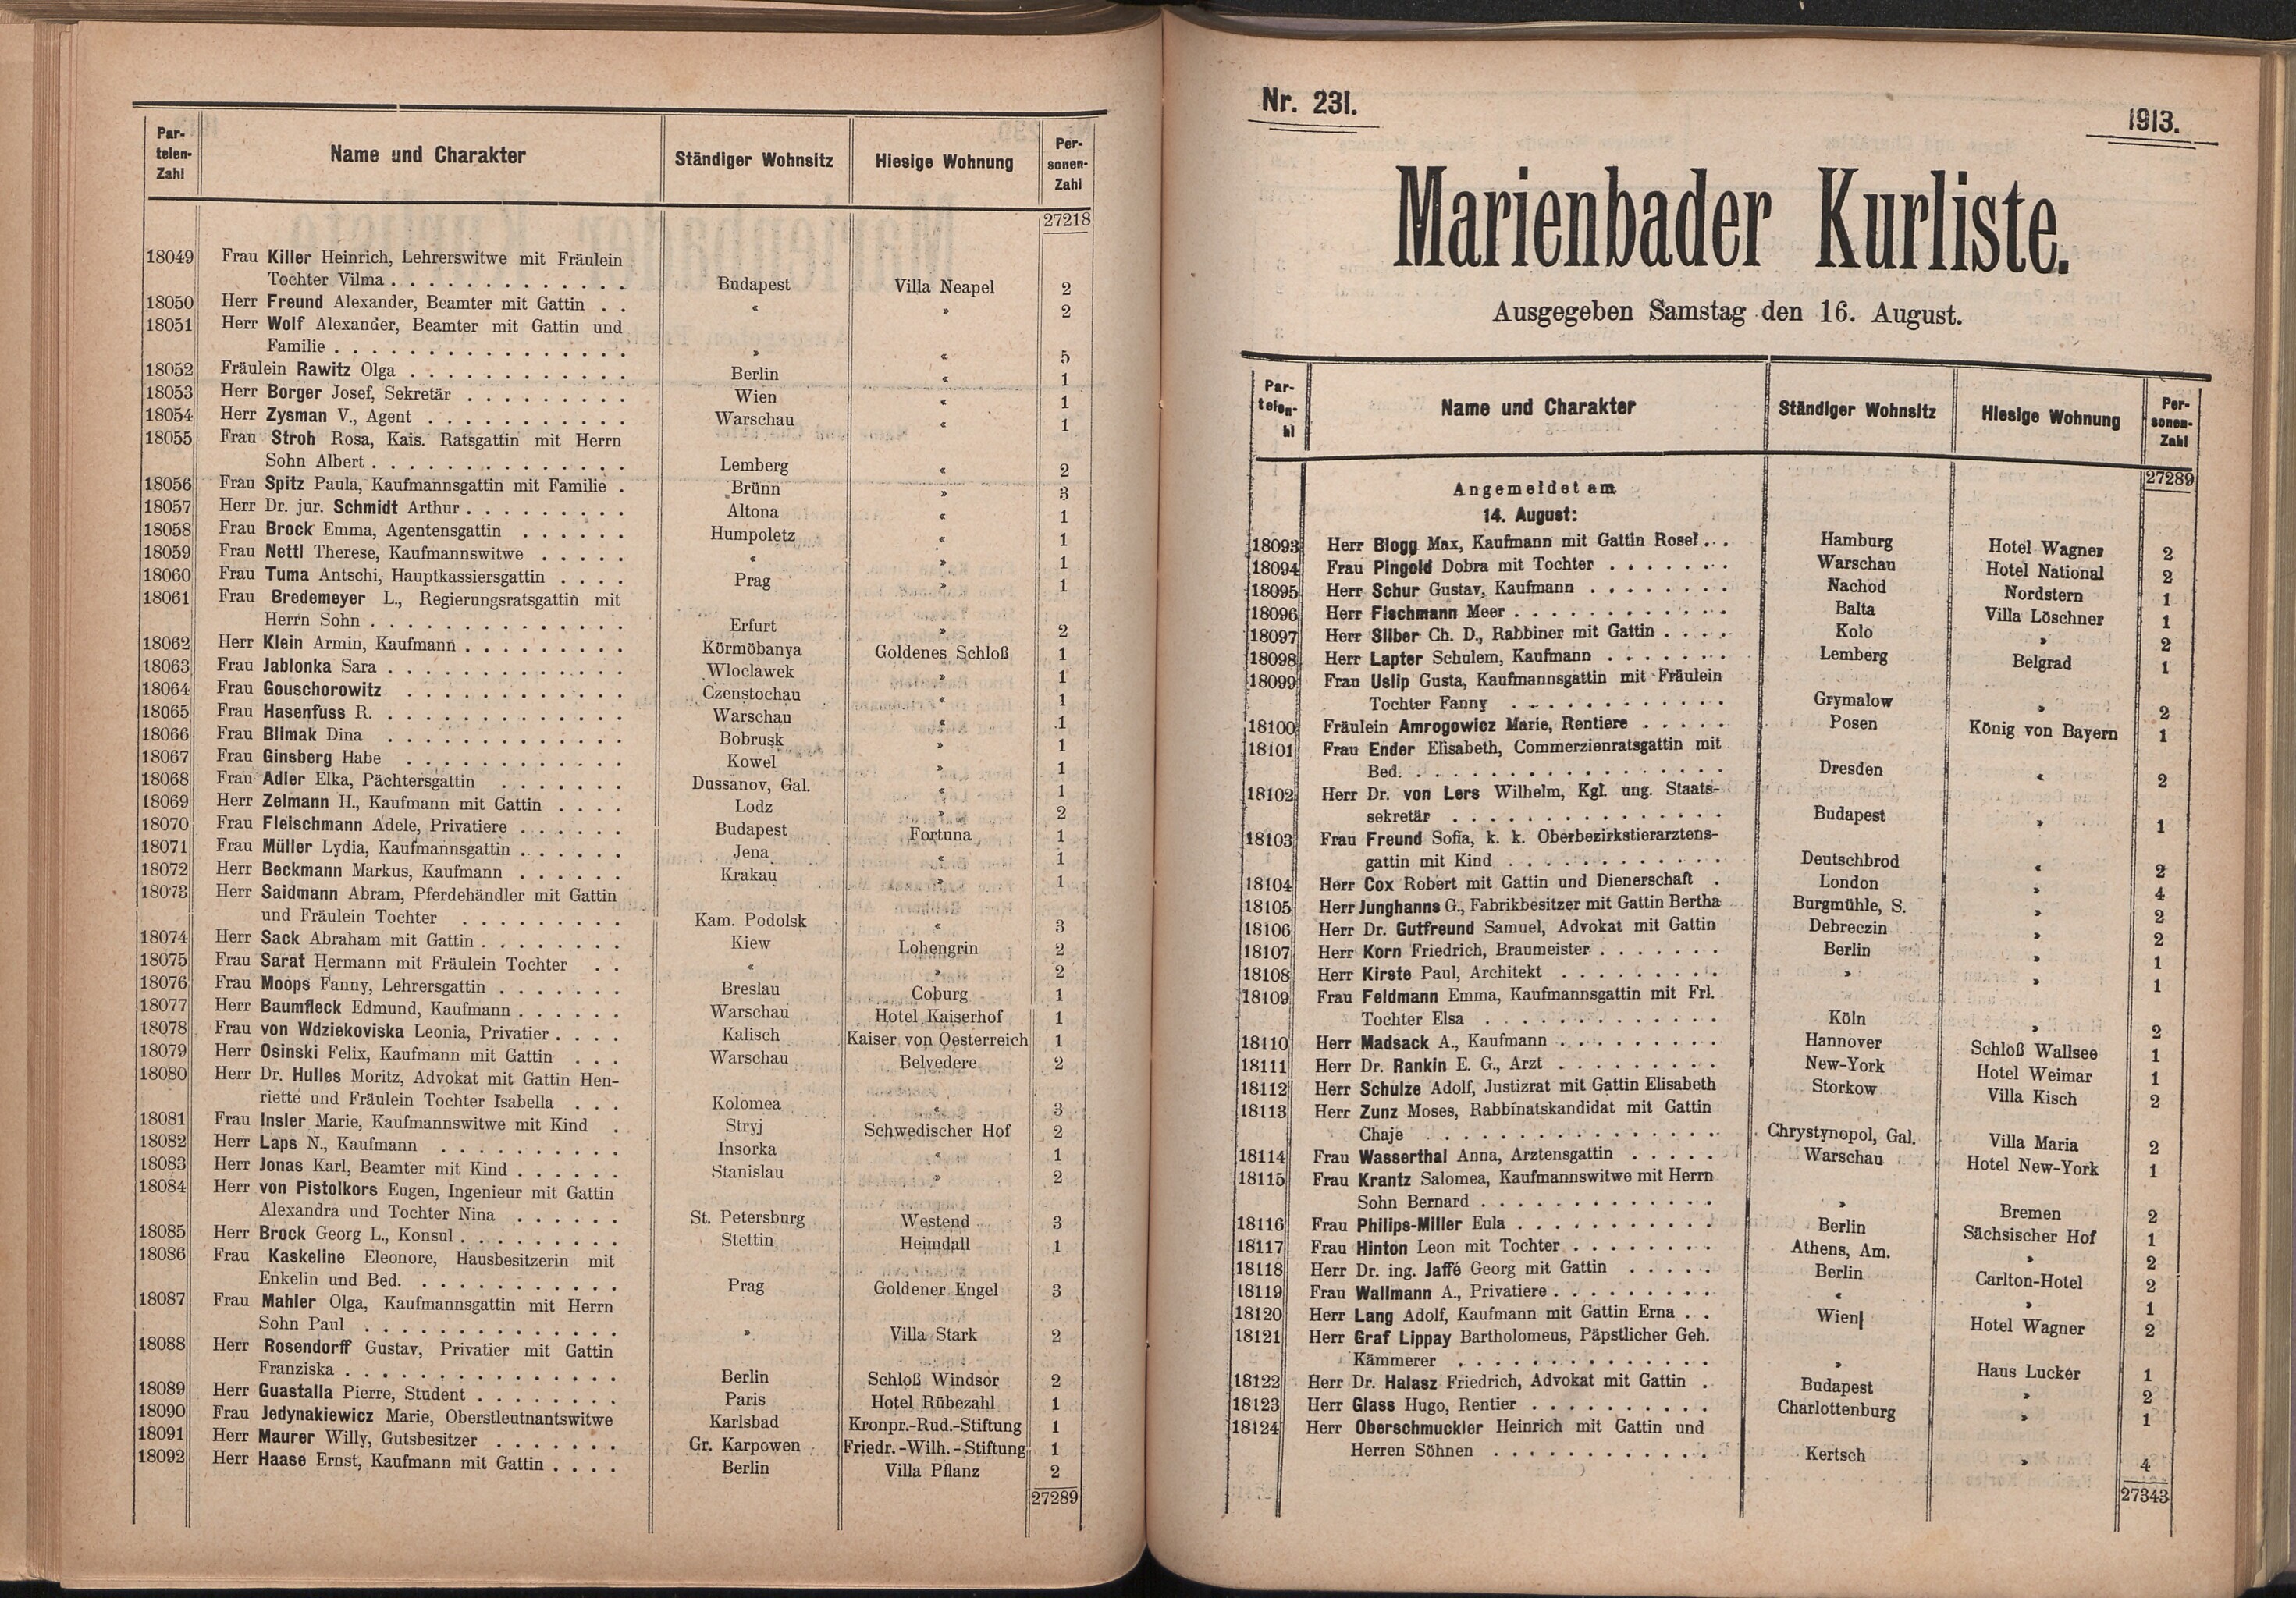 248. soap-ch_knihovna_marienbader-kurliste-1913_2480